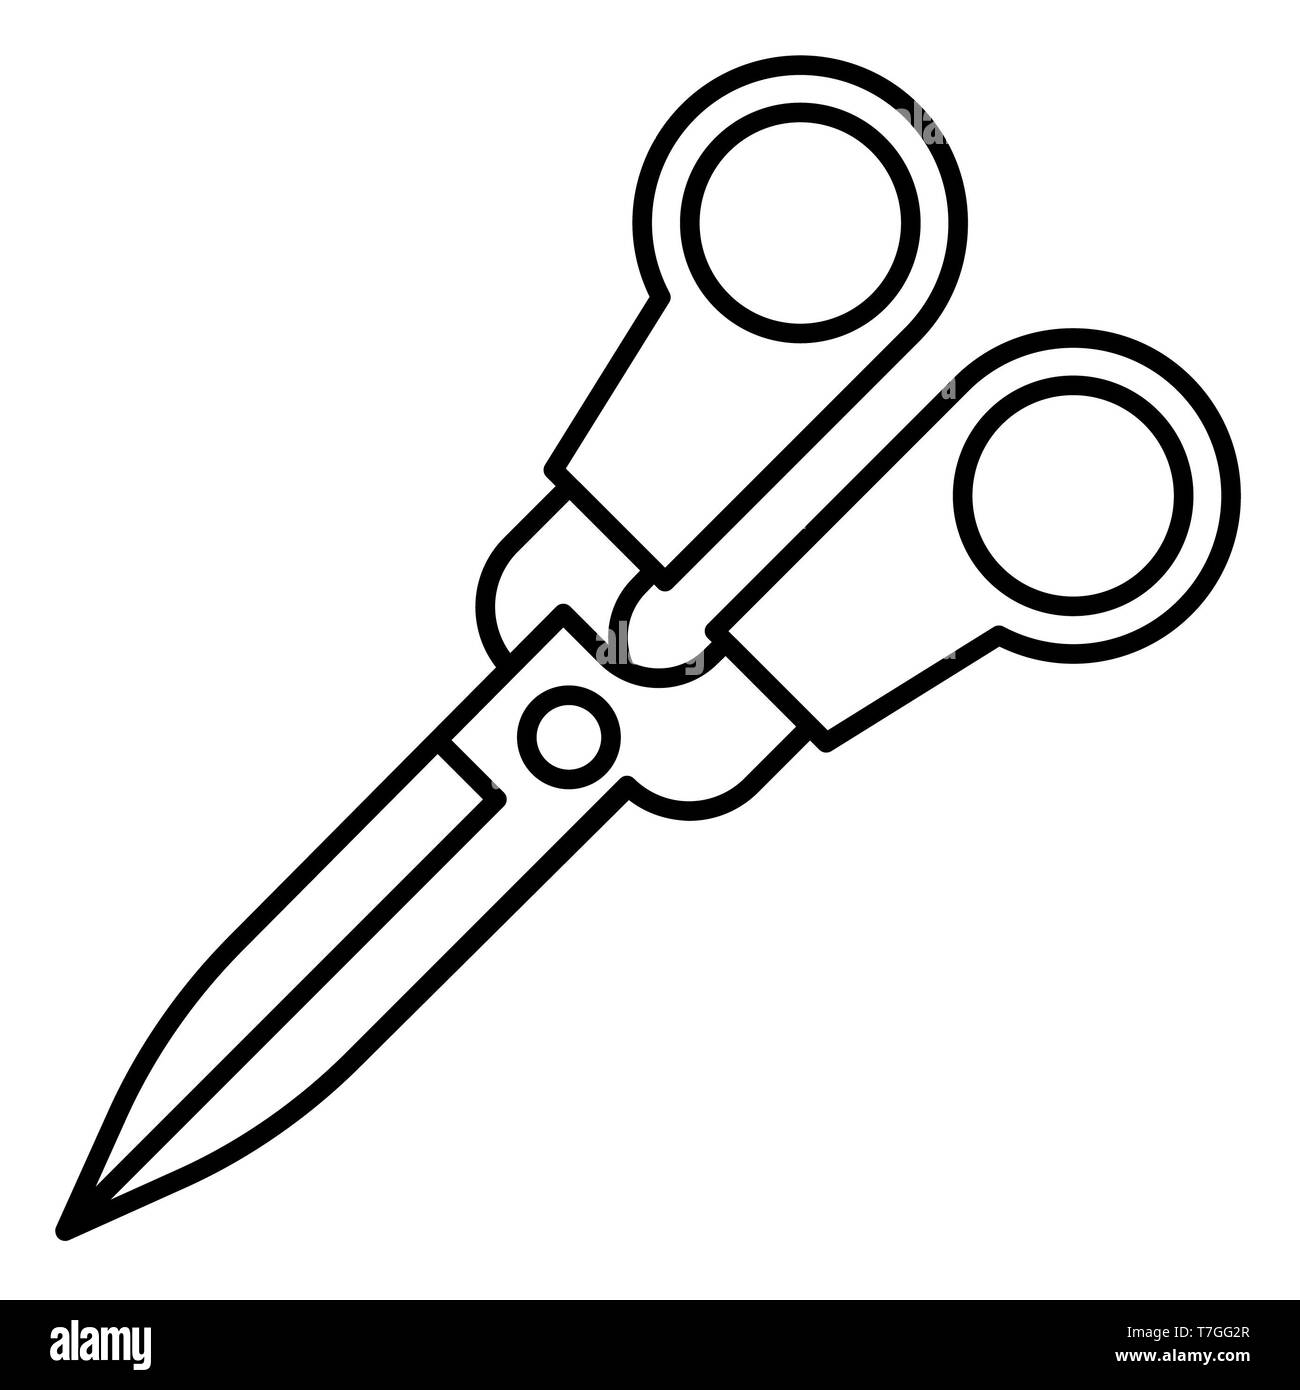 Scissors, Vector Illustration, Education Outline Stock Photo